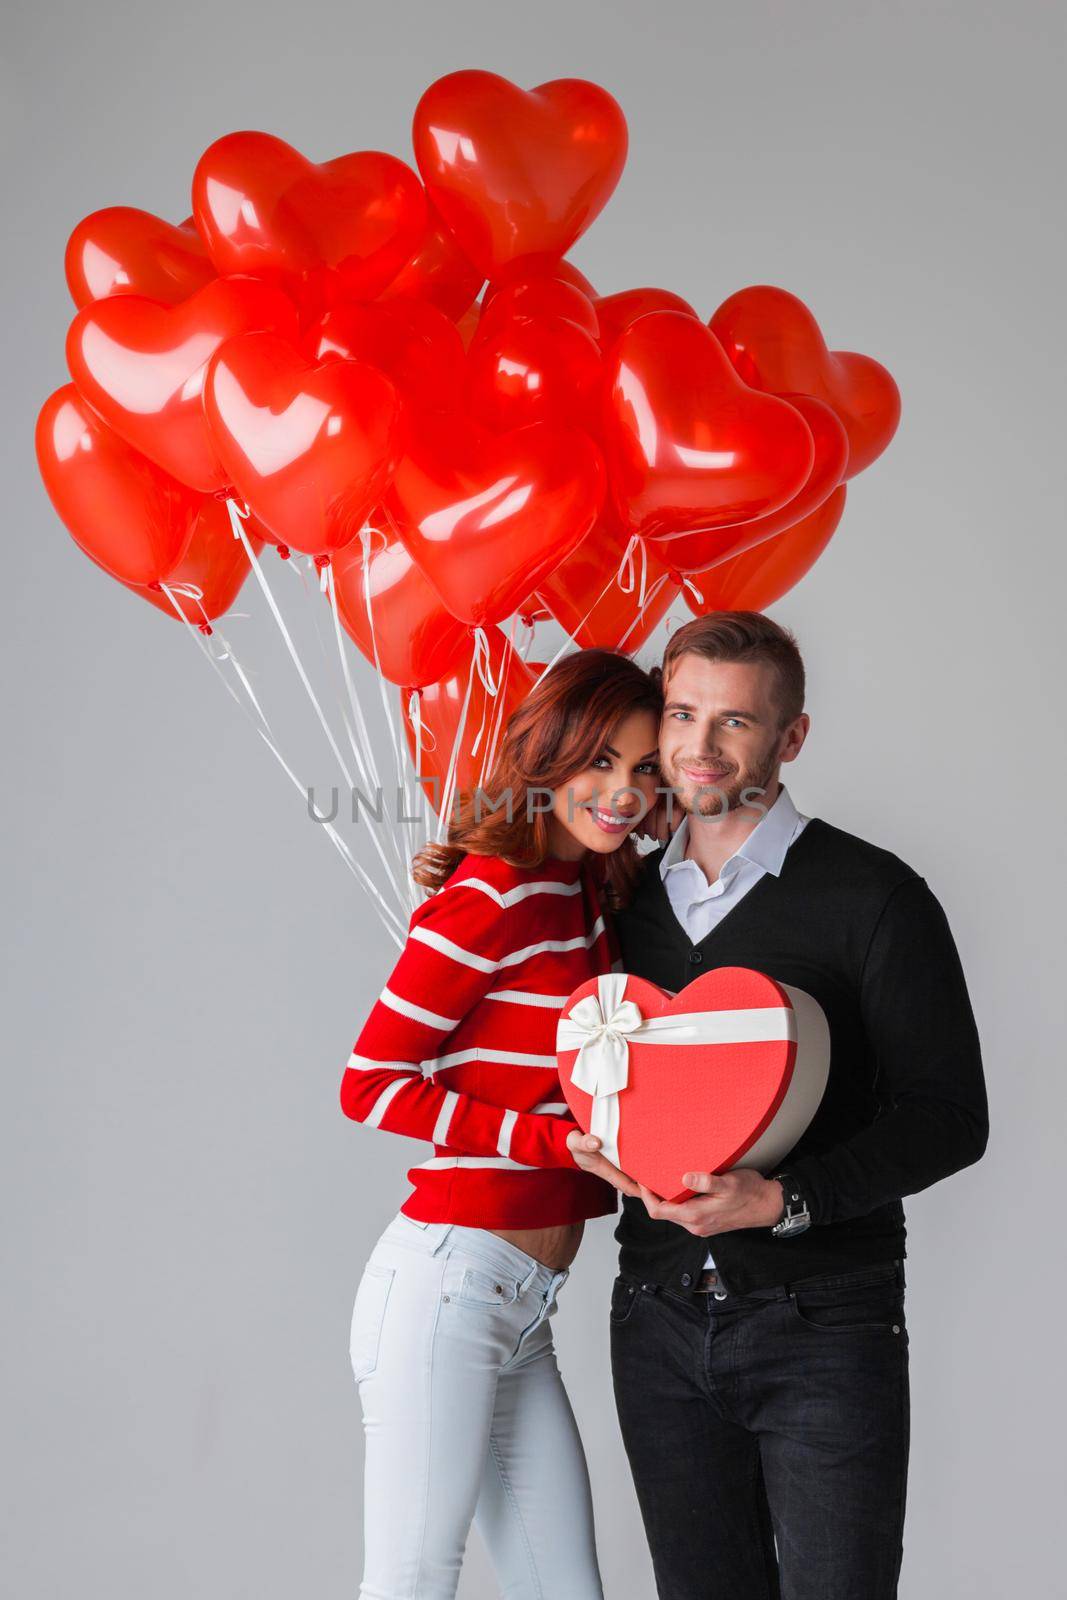 Couple celebrating Saint Valentine's Day by Yellowj